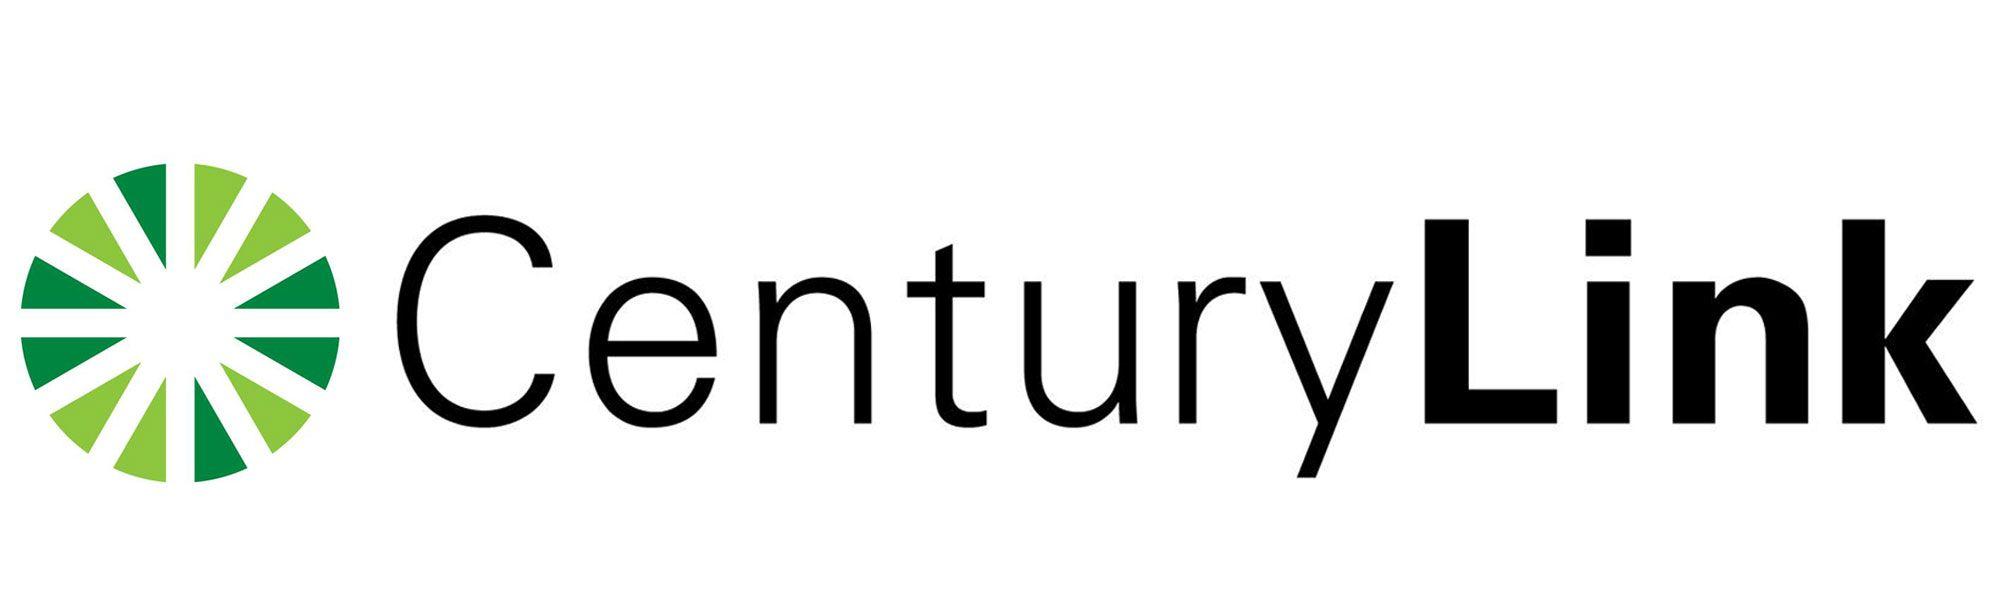 CenturyLink Logo - Centurylink - Bedford County Chamber of Commerce